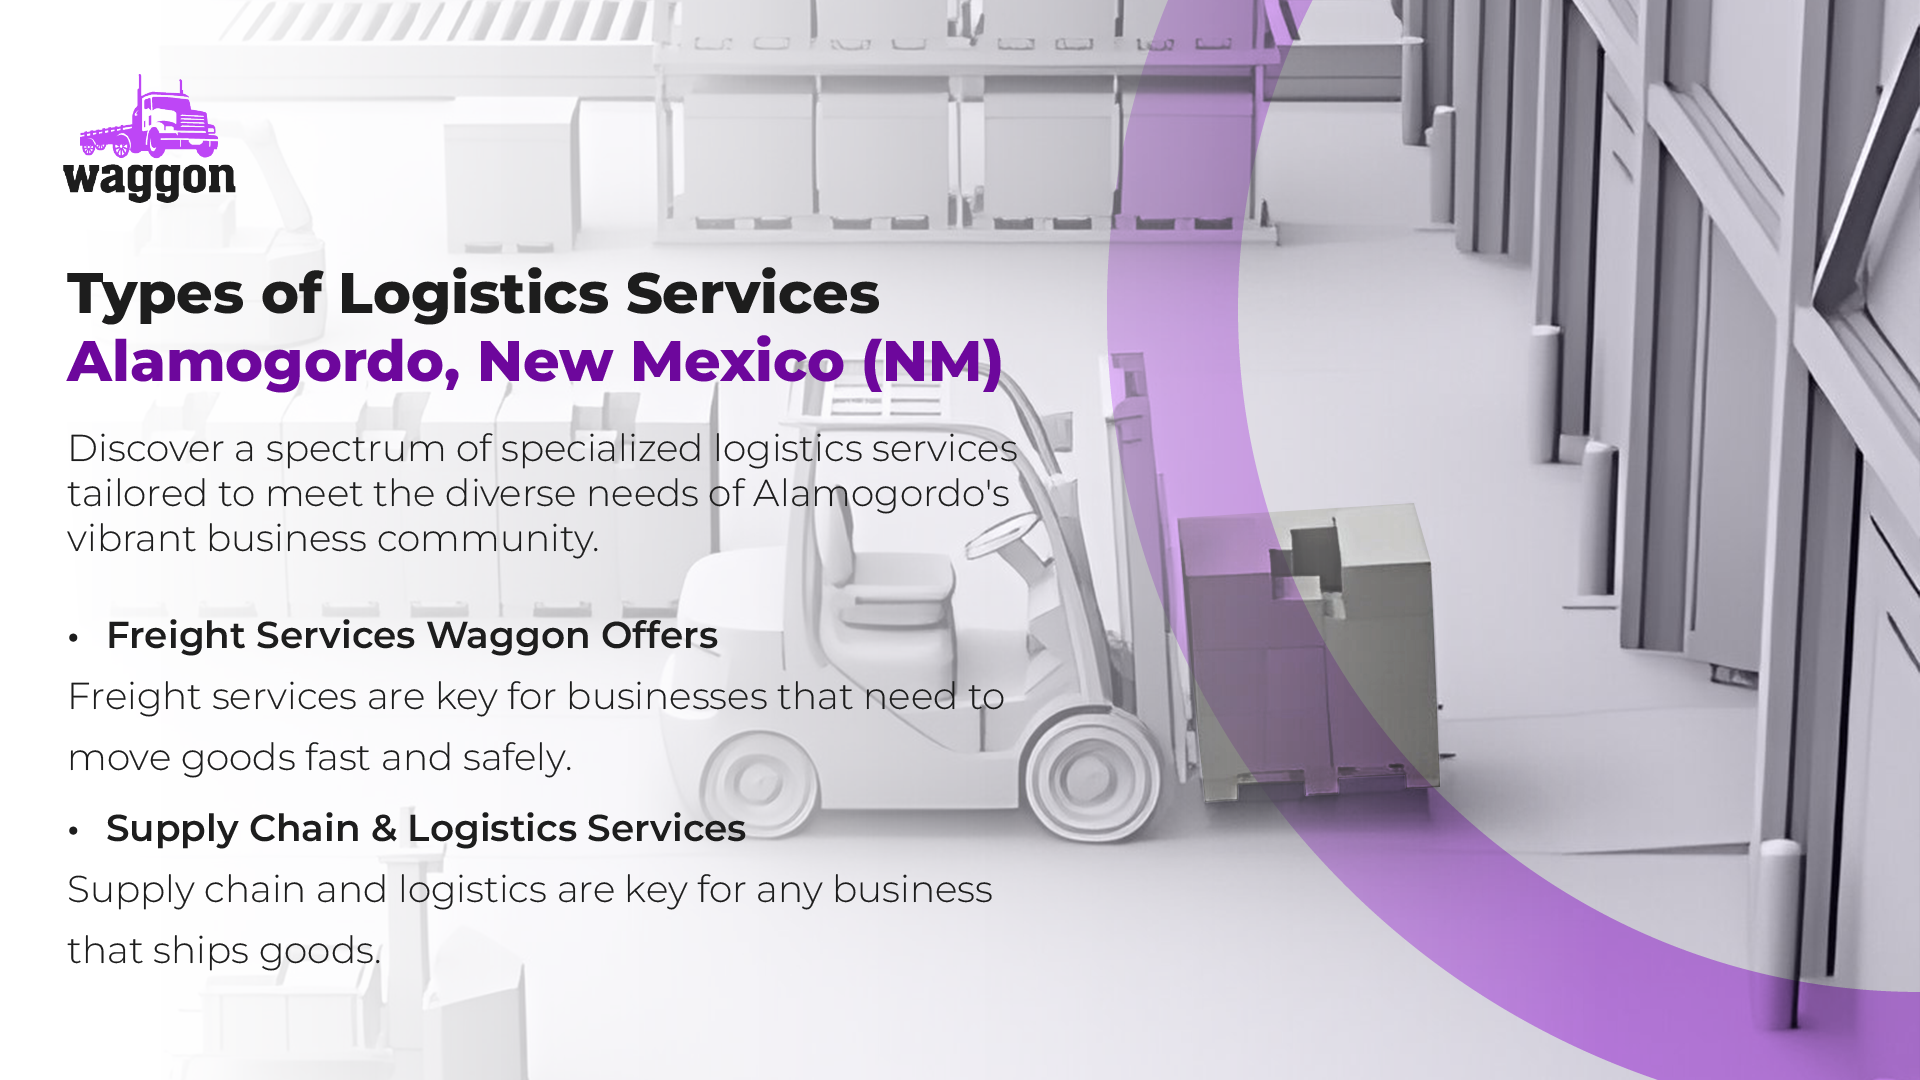 Types of Logistics Services in Alamogordo, New Mexico (NM)